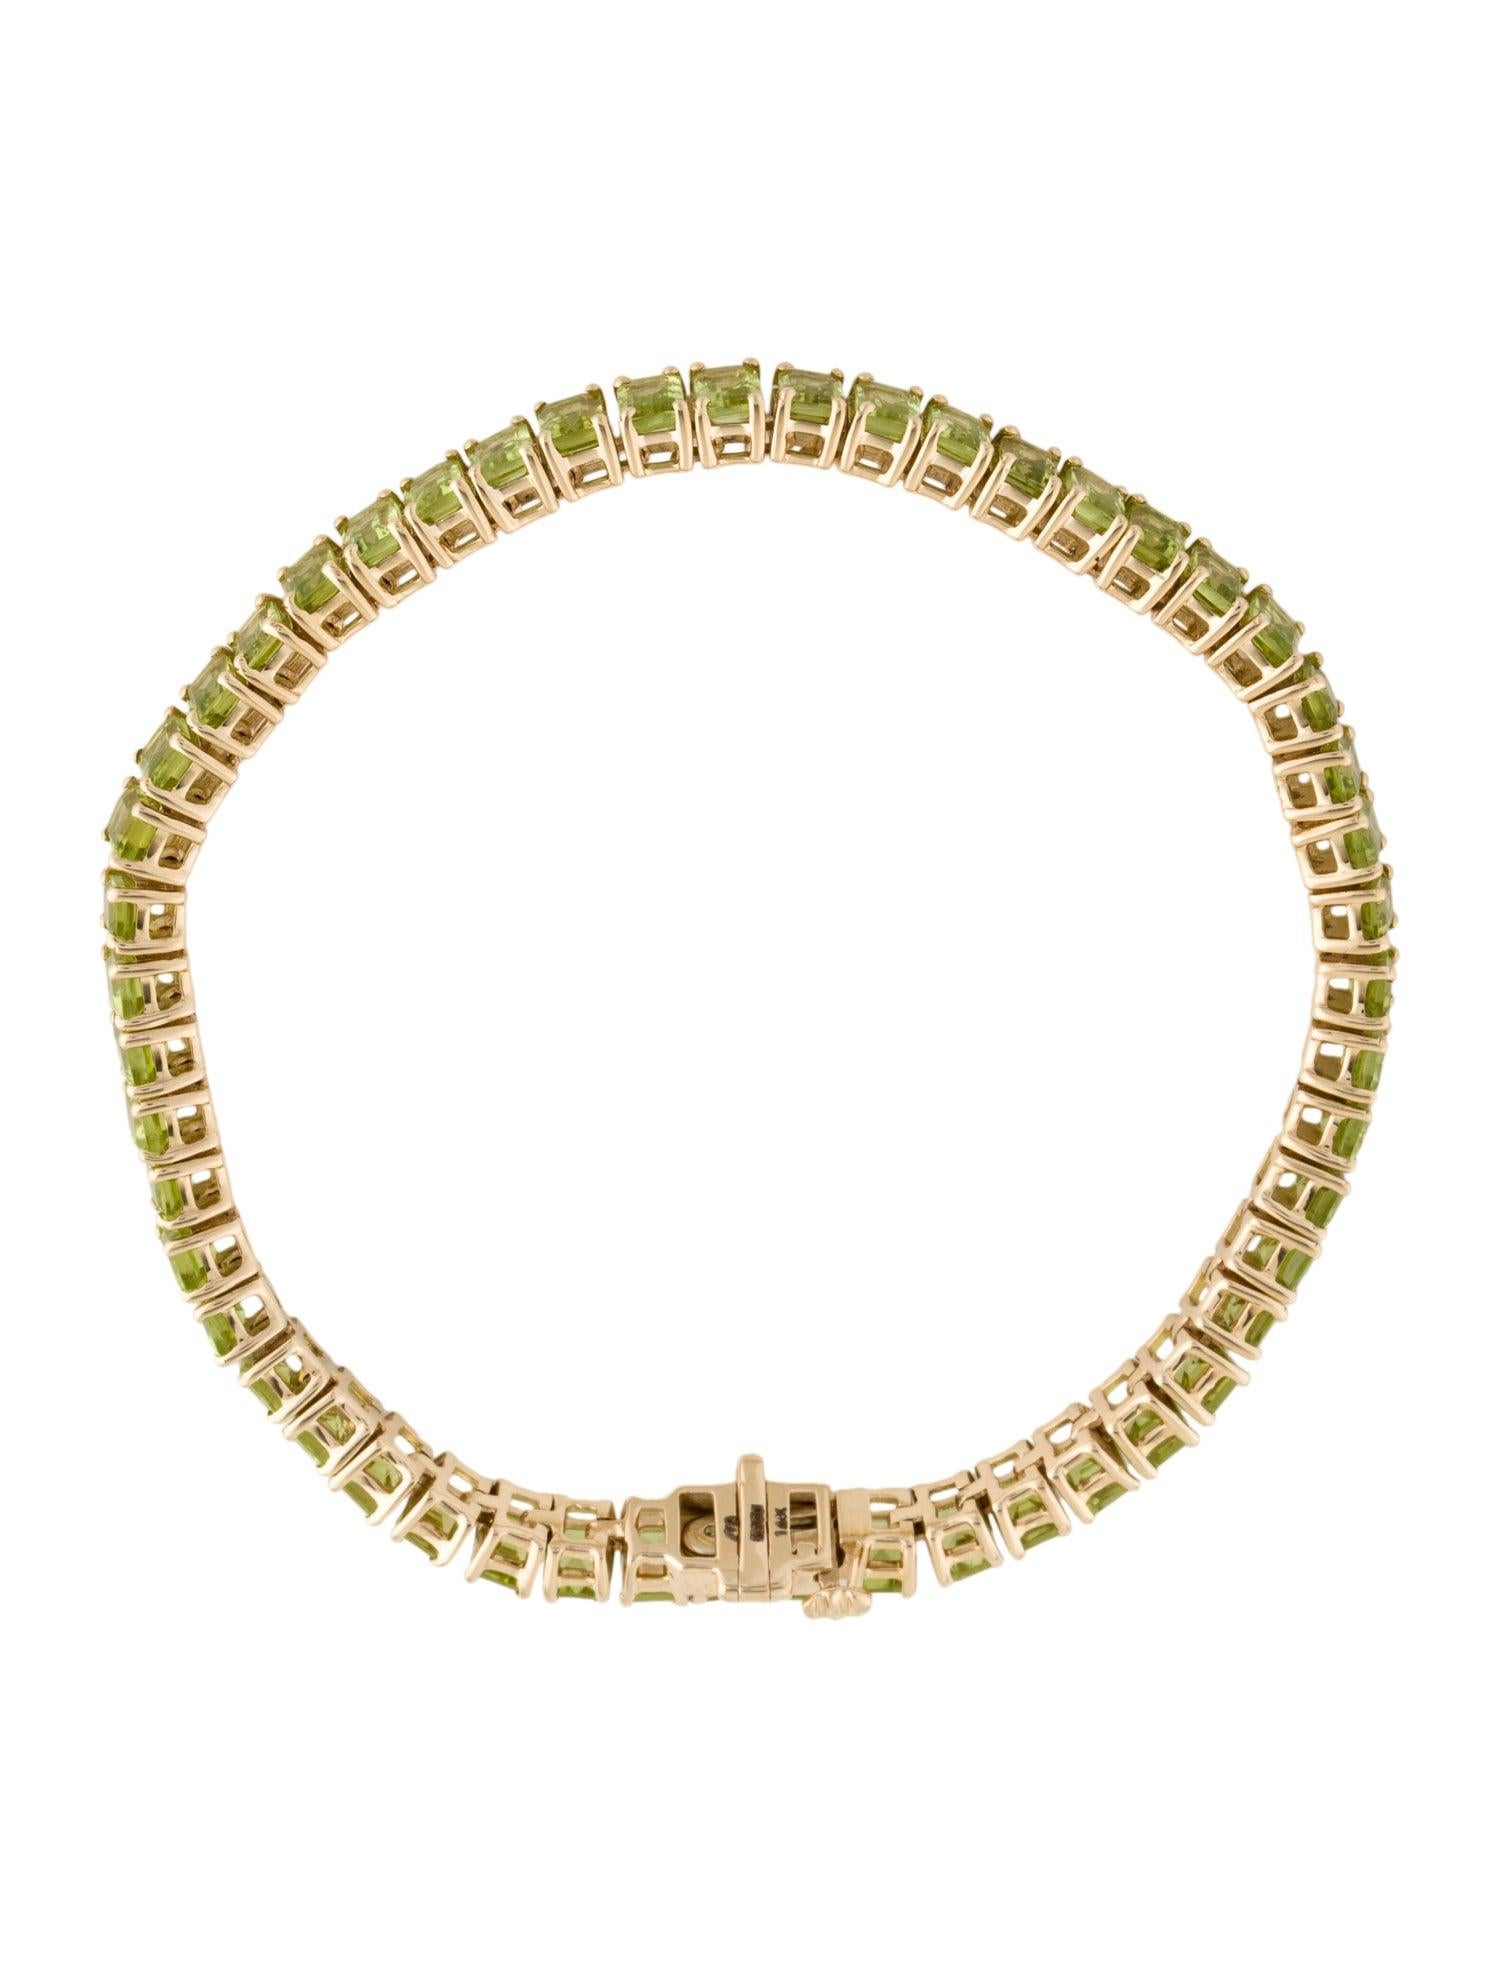 Brilliant Cut 14K 12.78ctw Peridot Link Bracelet - Vibrant Gemstone Elegance, Timeless Luxury For Sale